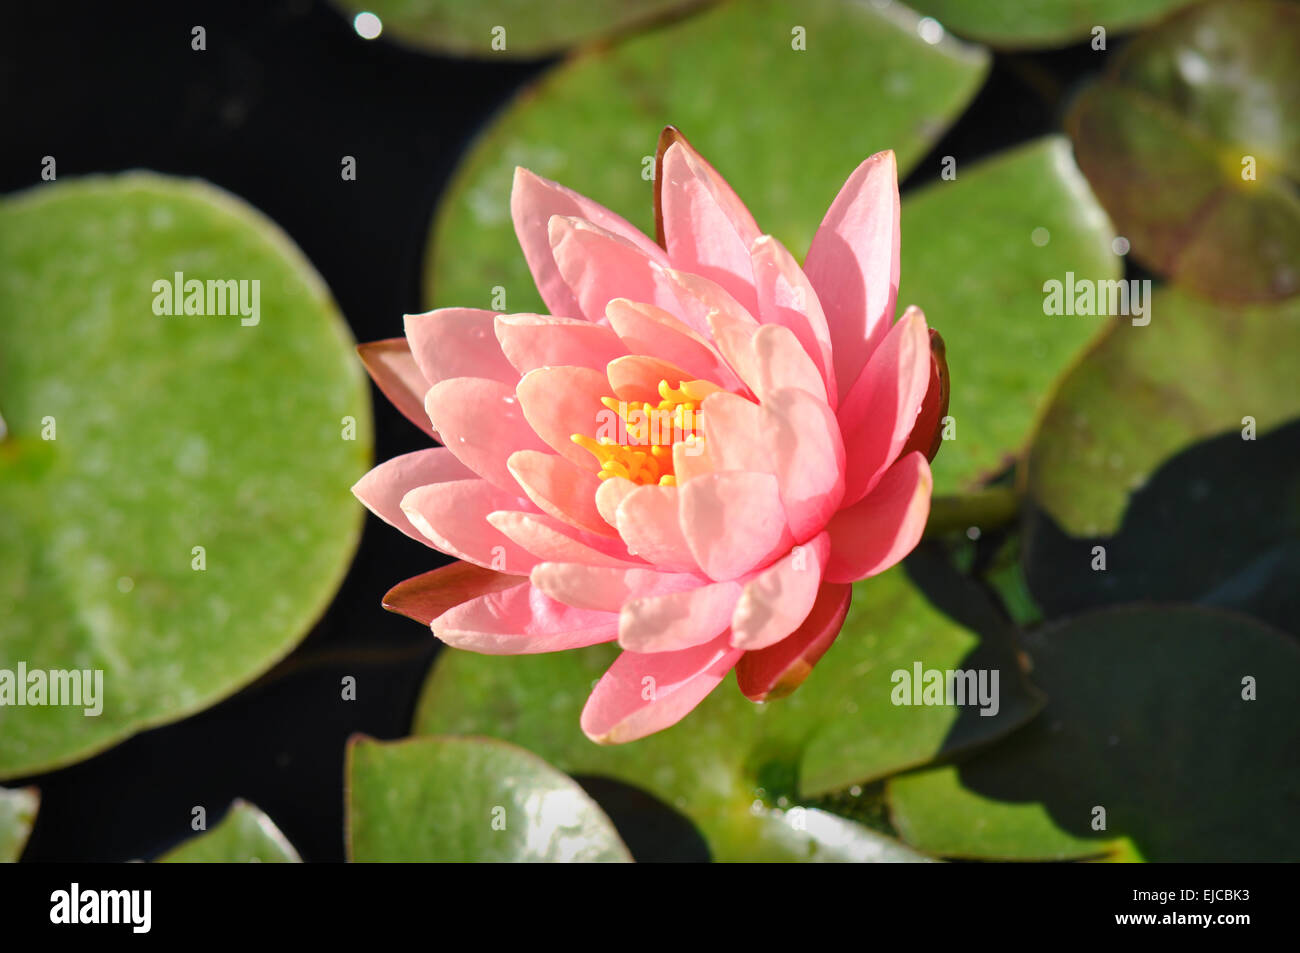 Rosa Lotusblume auf Lilly Pad Stockfoto